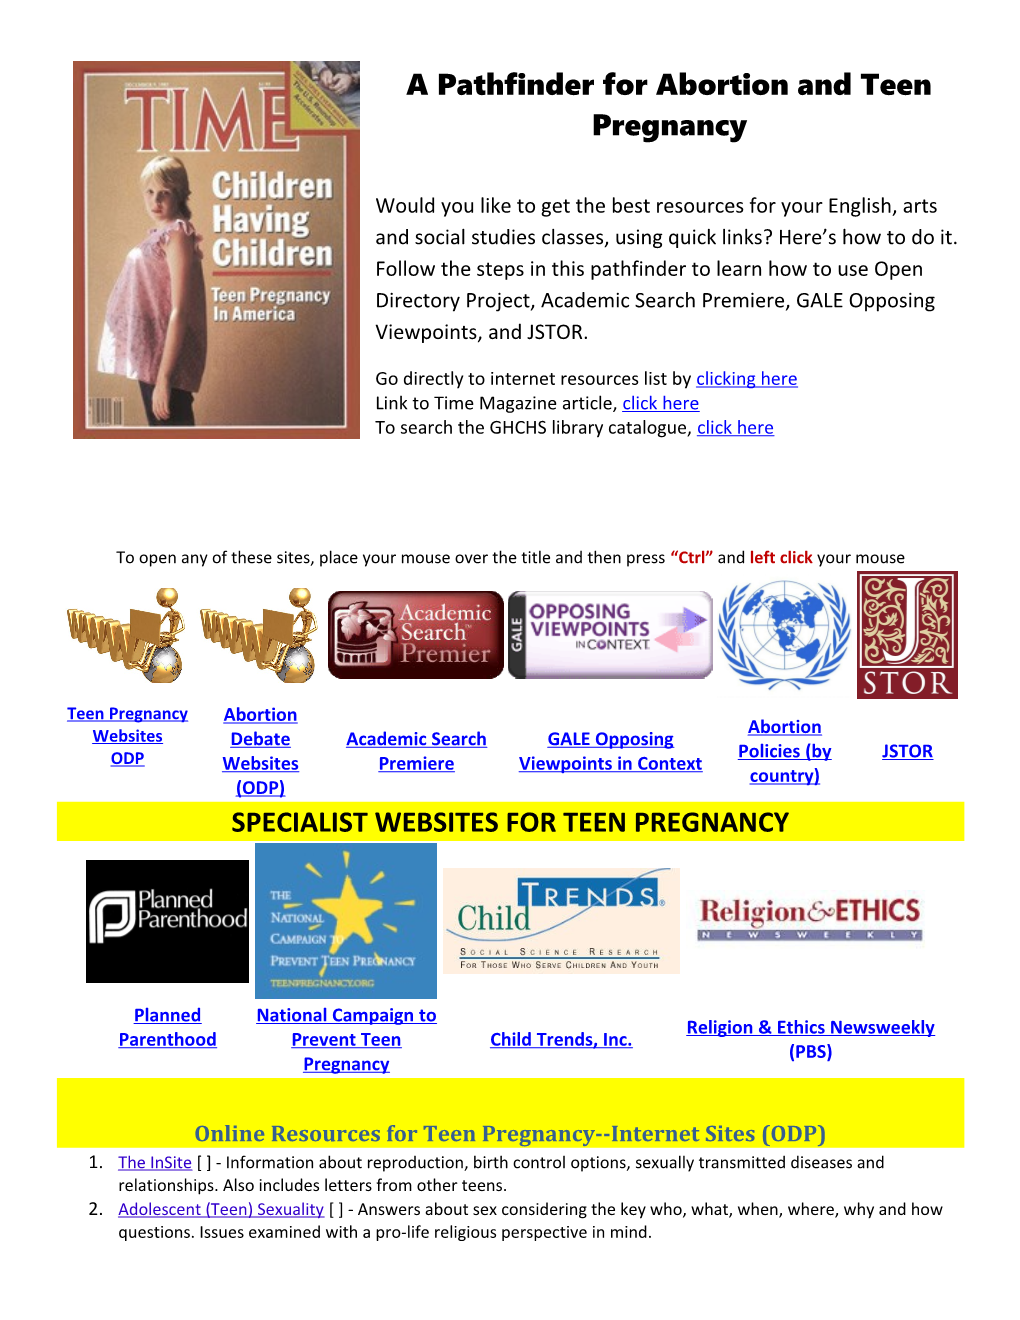 Online Resources for Teen Pregnancy Internet Sites (ODP)